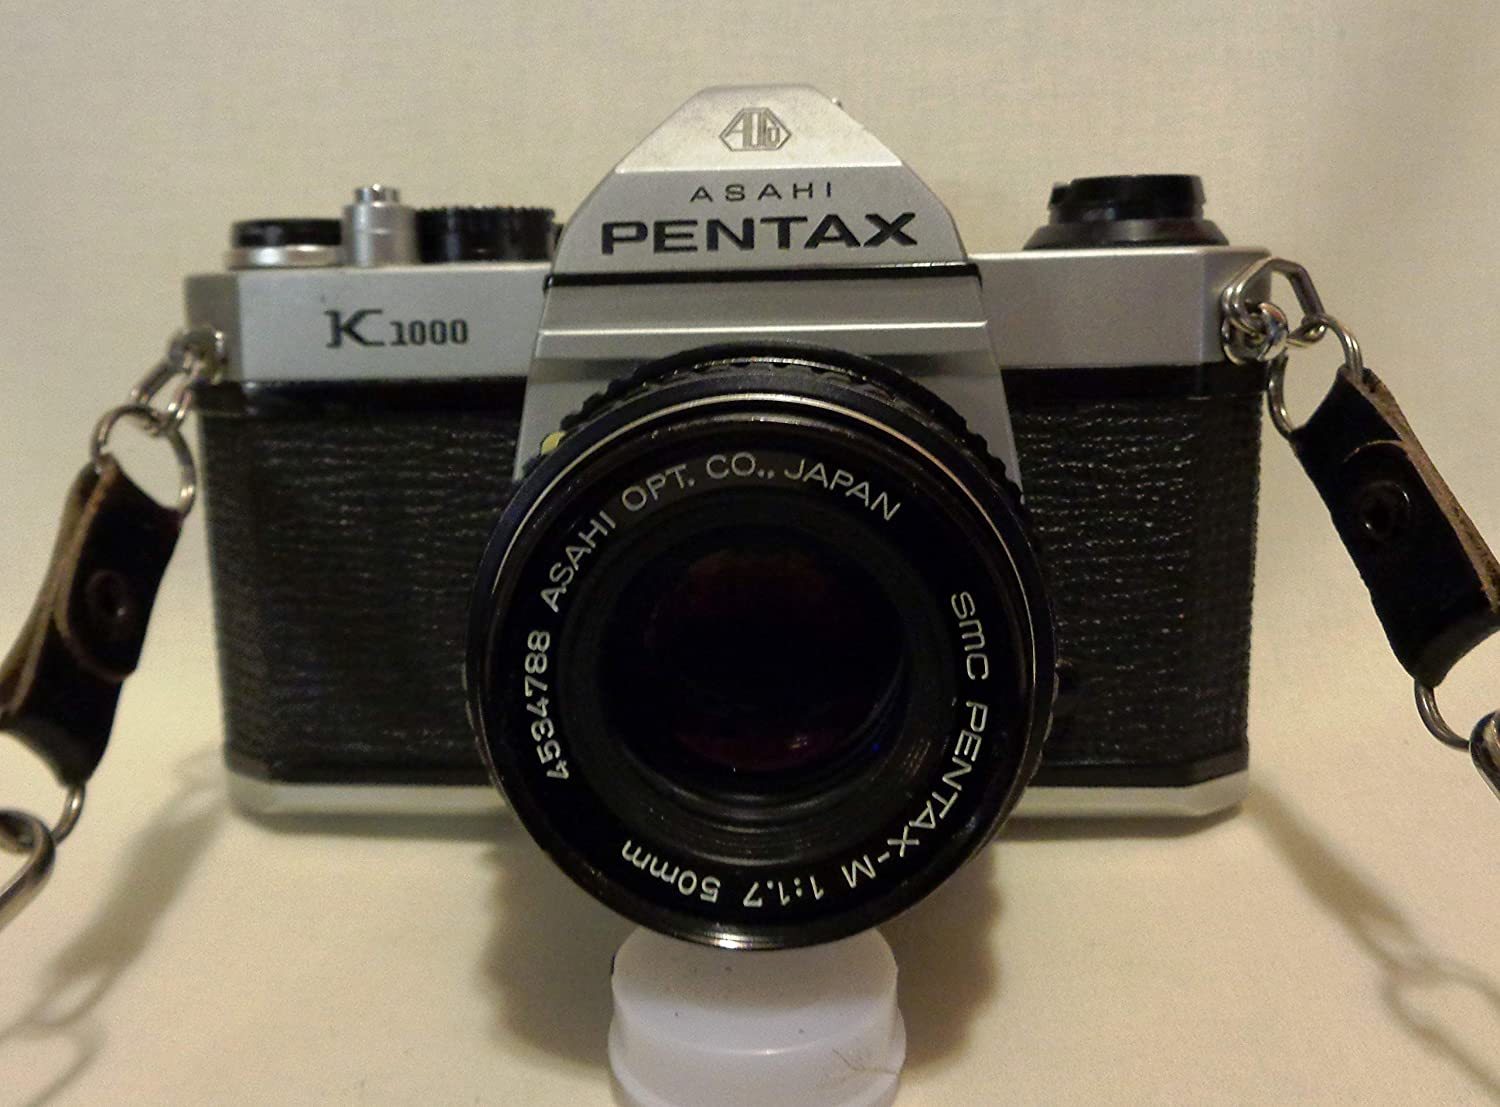 Pentax K1000 Manual Focus Slr Film Camera With Pentax 50Mm Lens. - $309.97